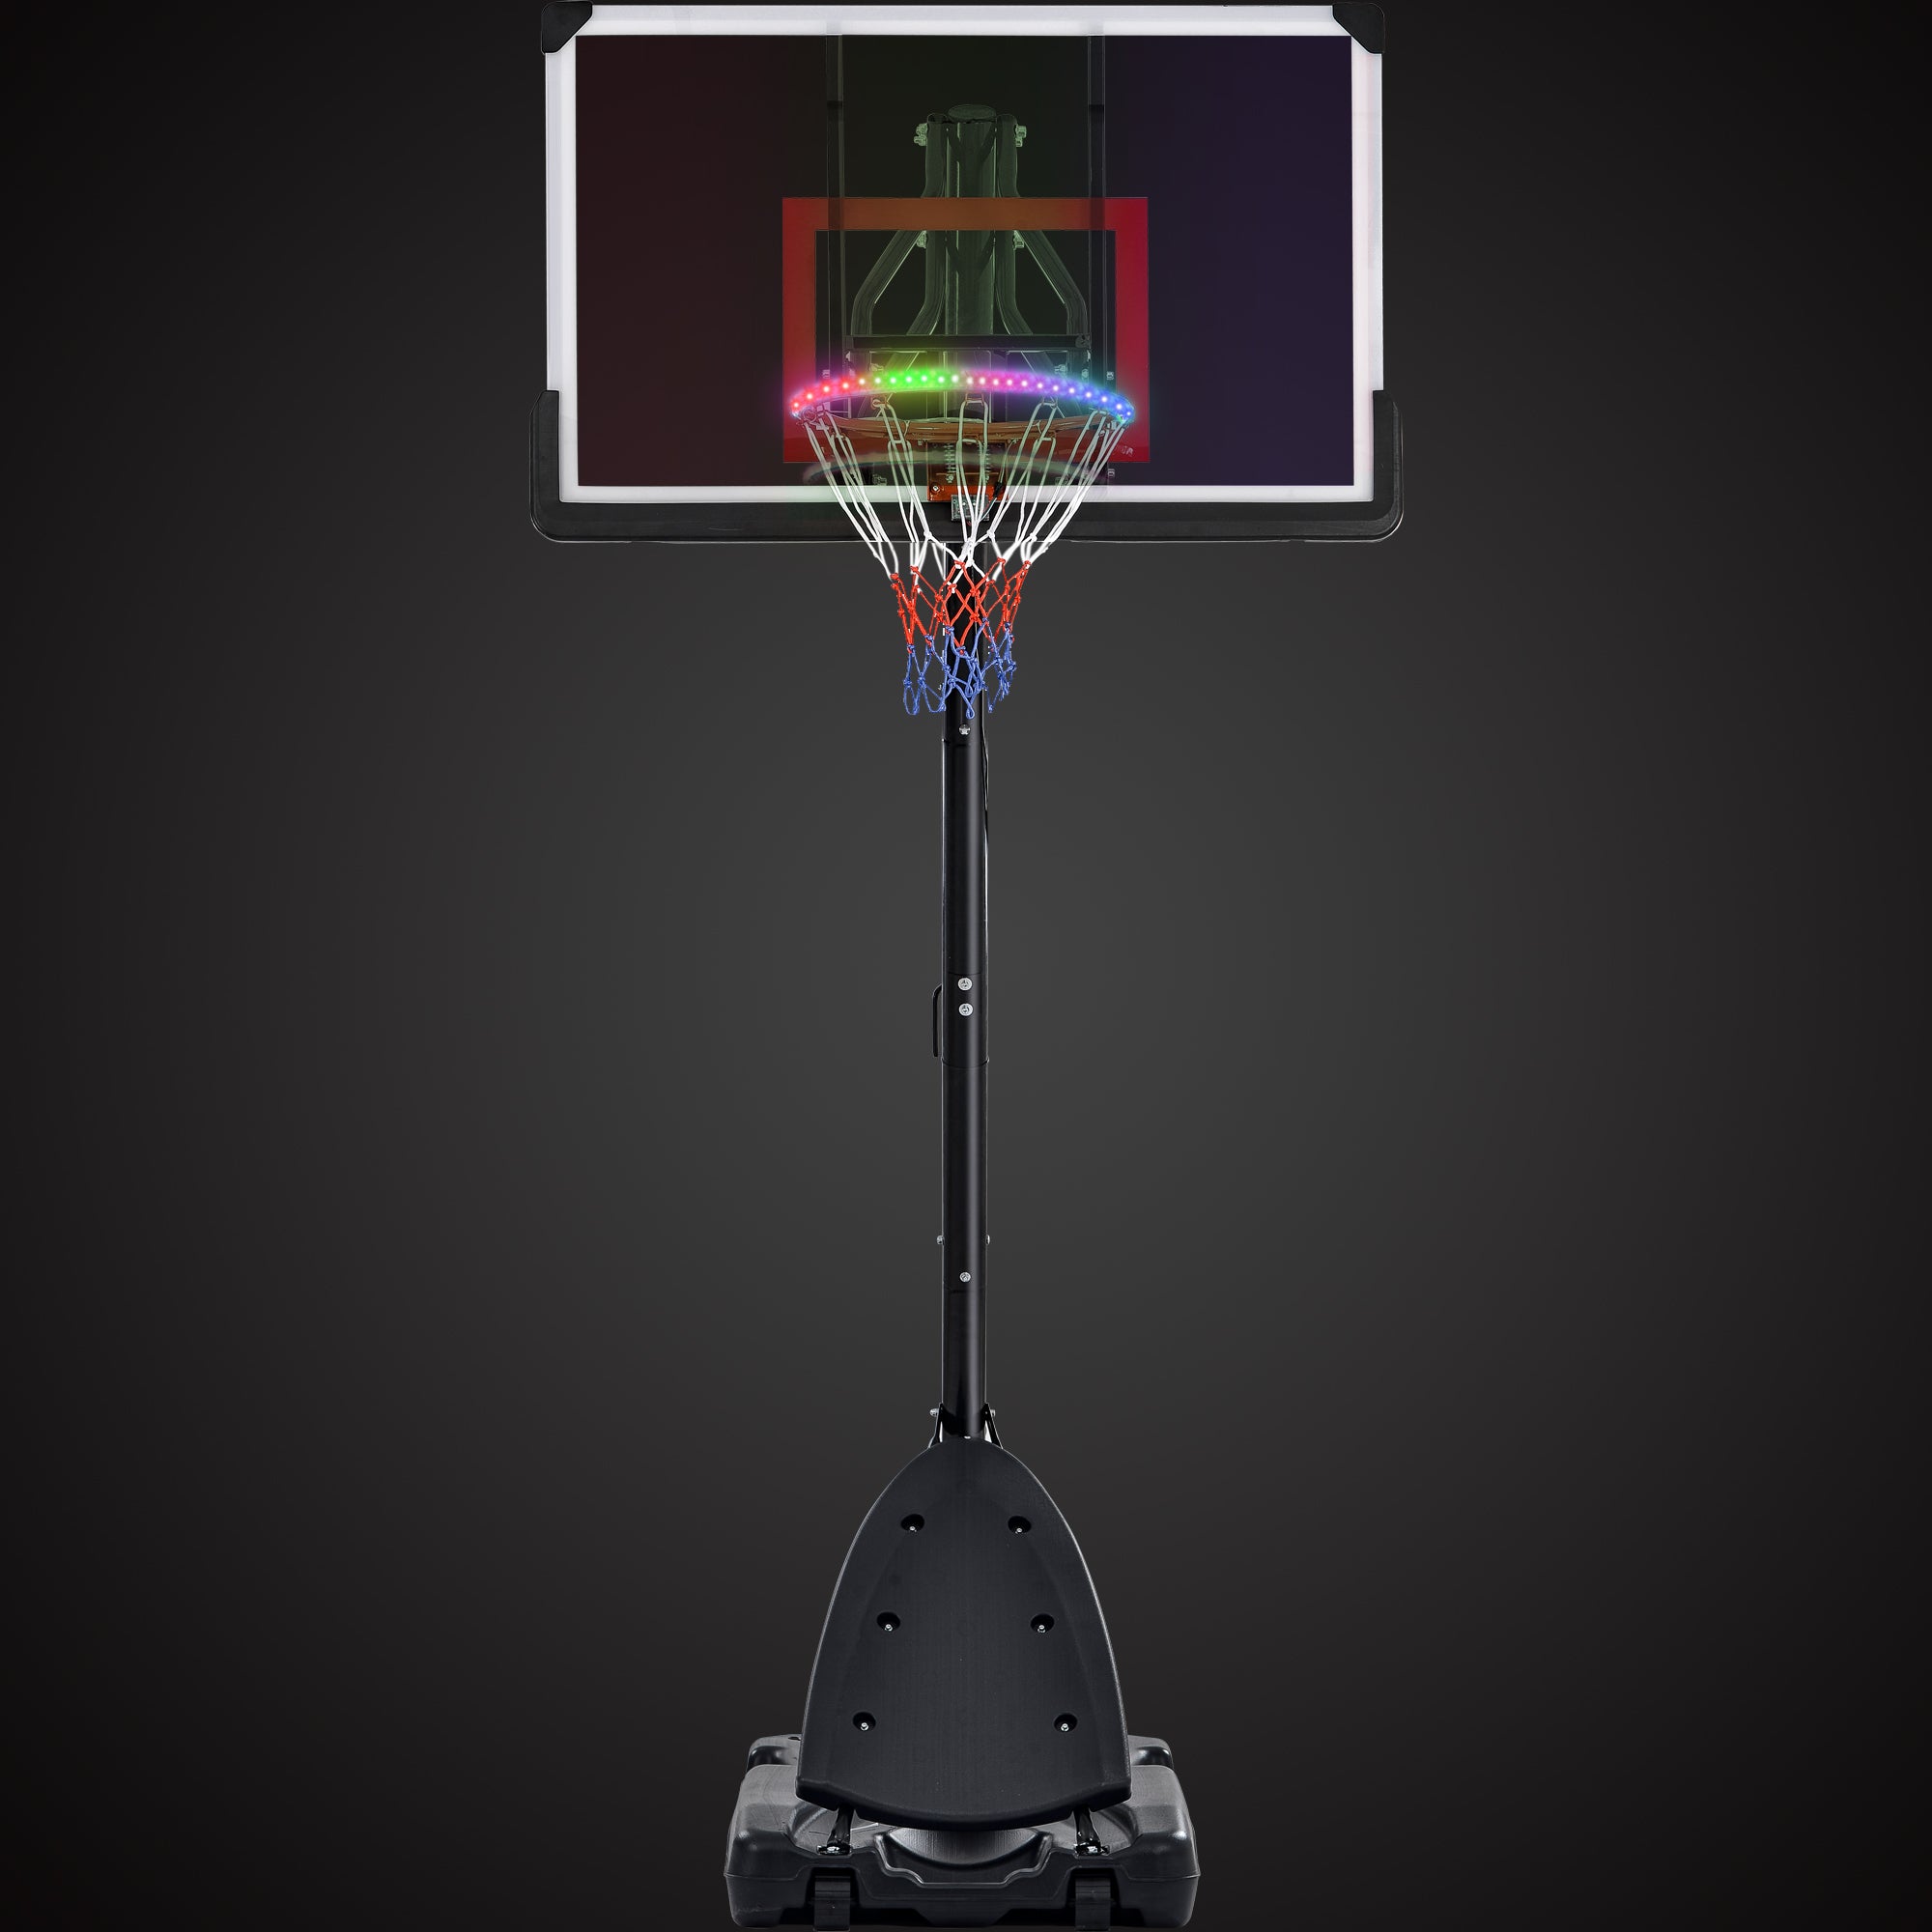 Basketball Hoop Basketball System Adjustable Basketball System